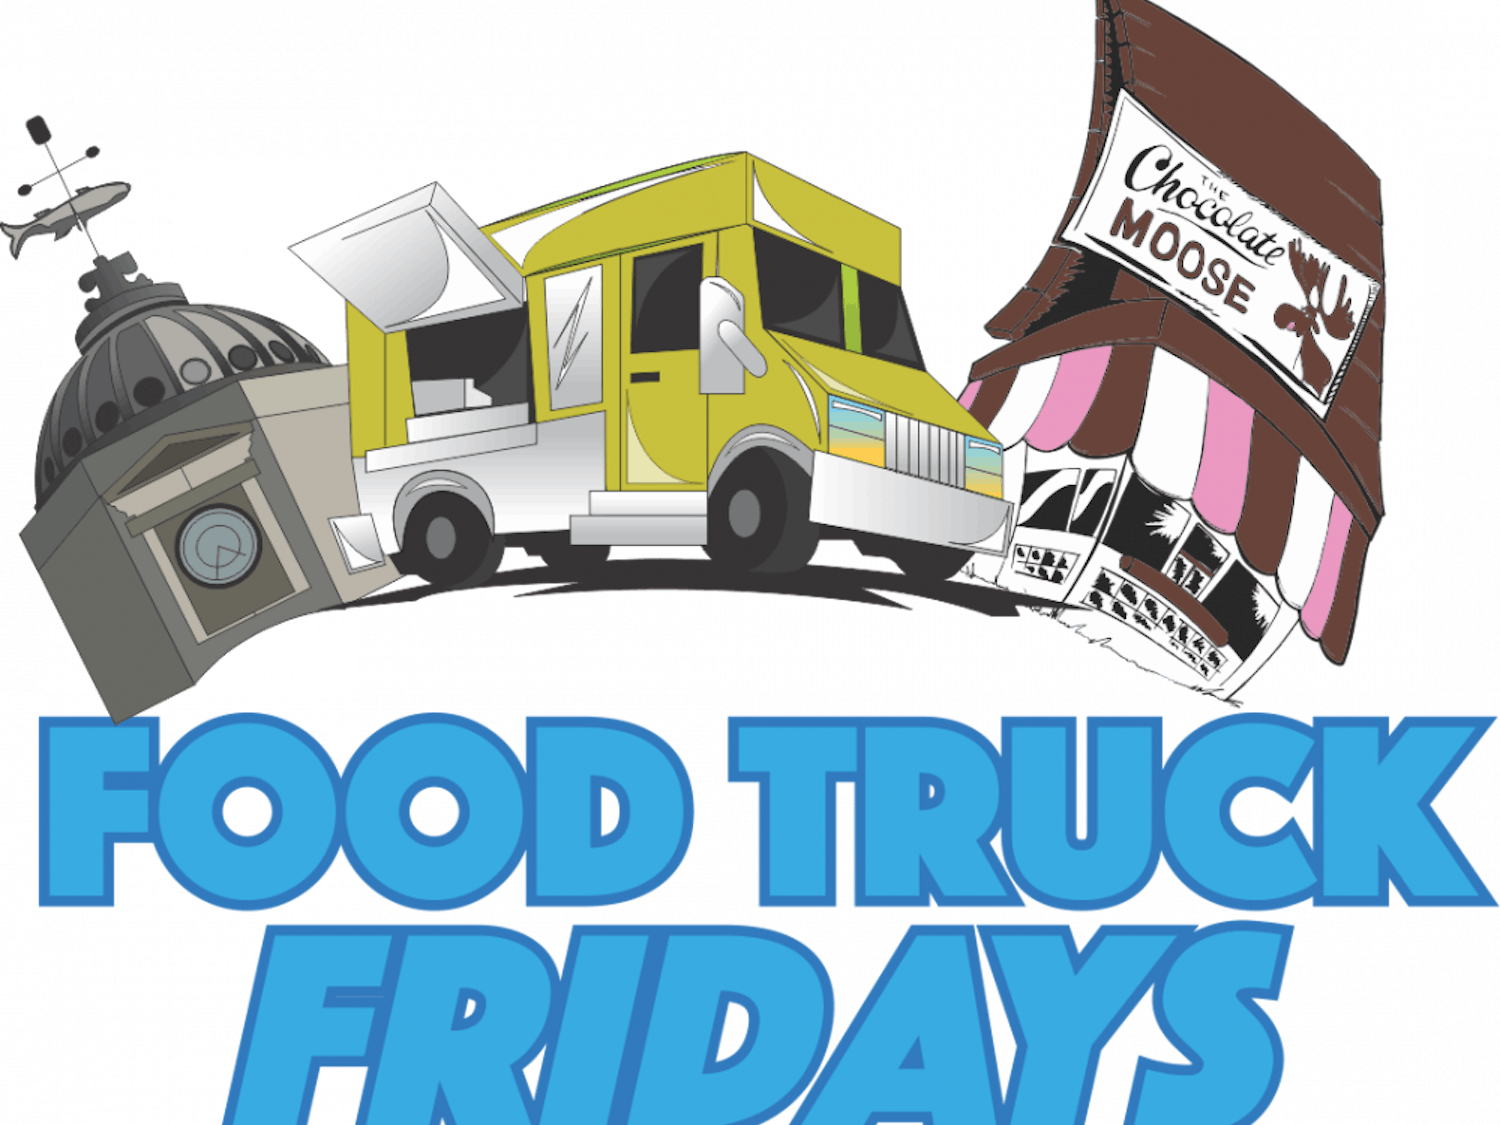 Food-Truck-Friday-logo